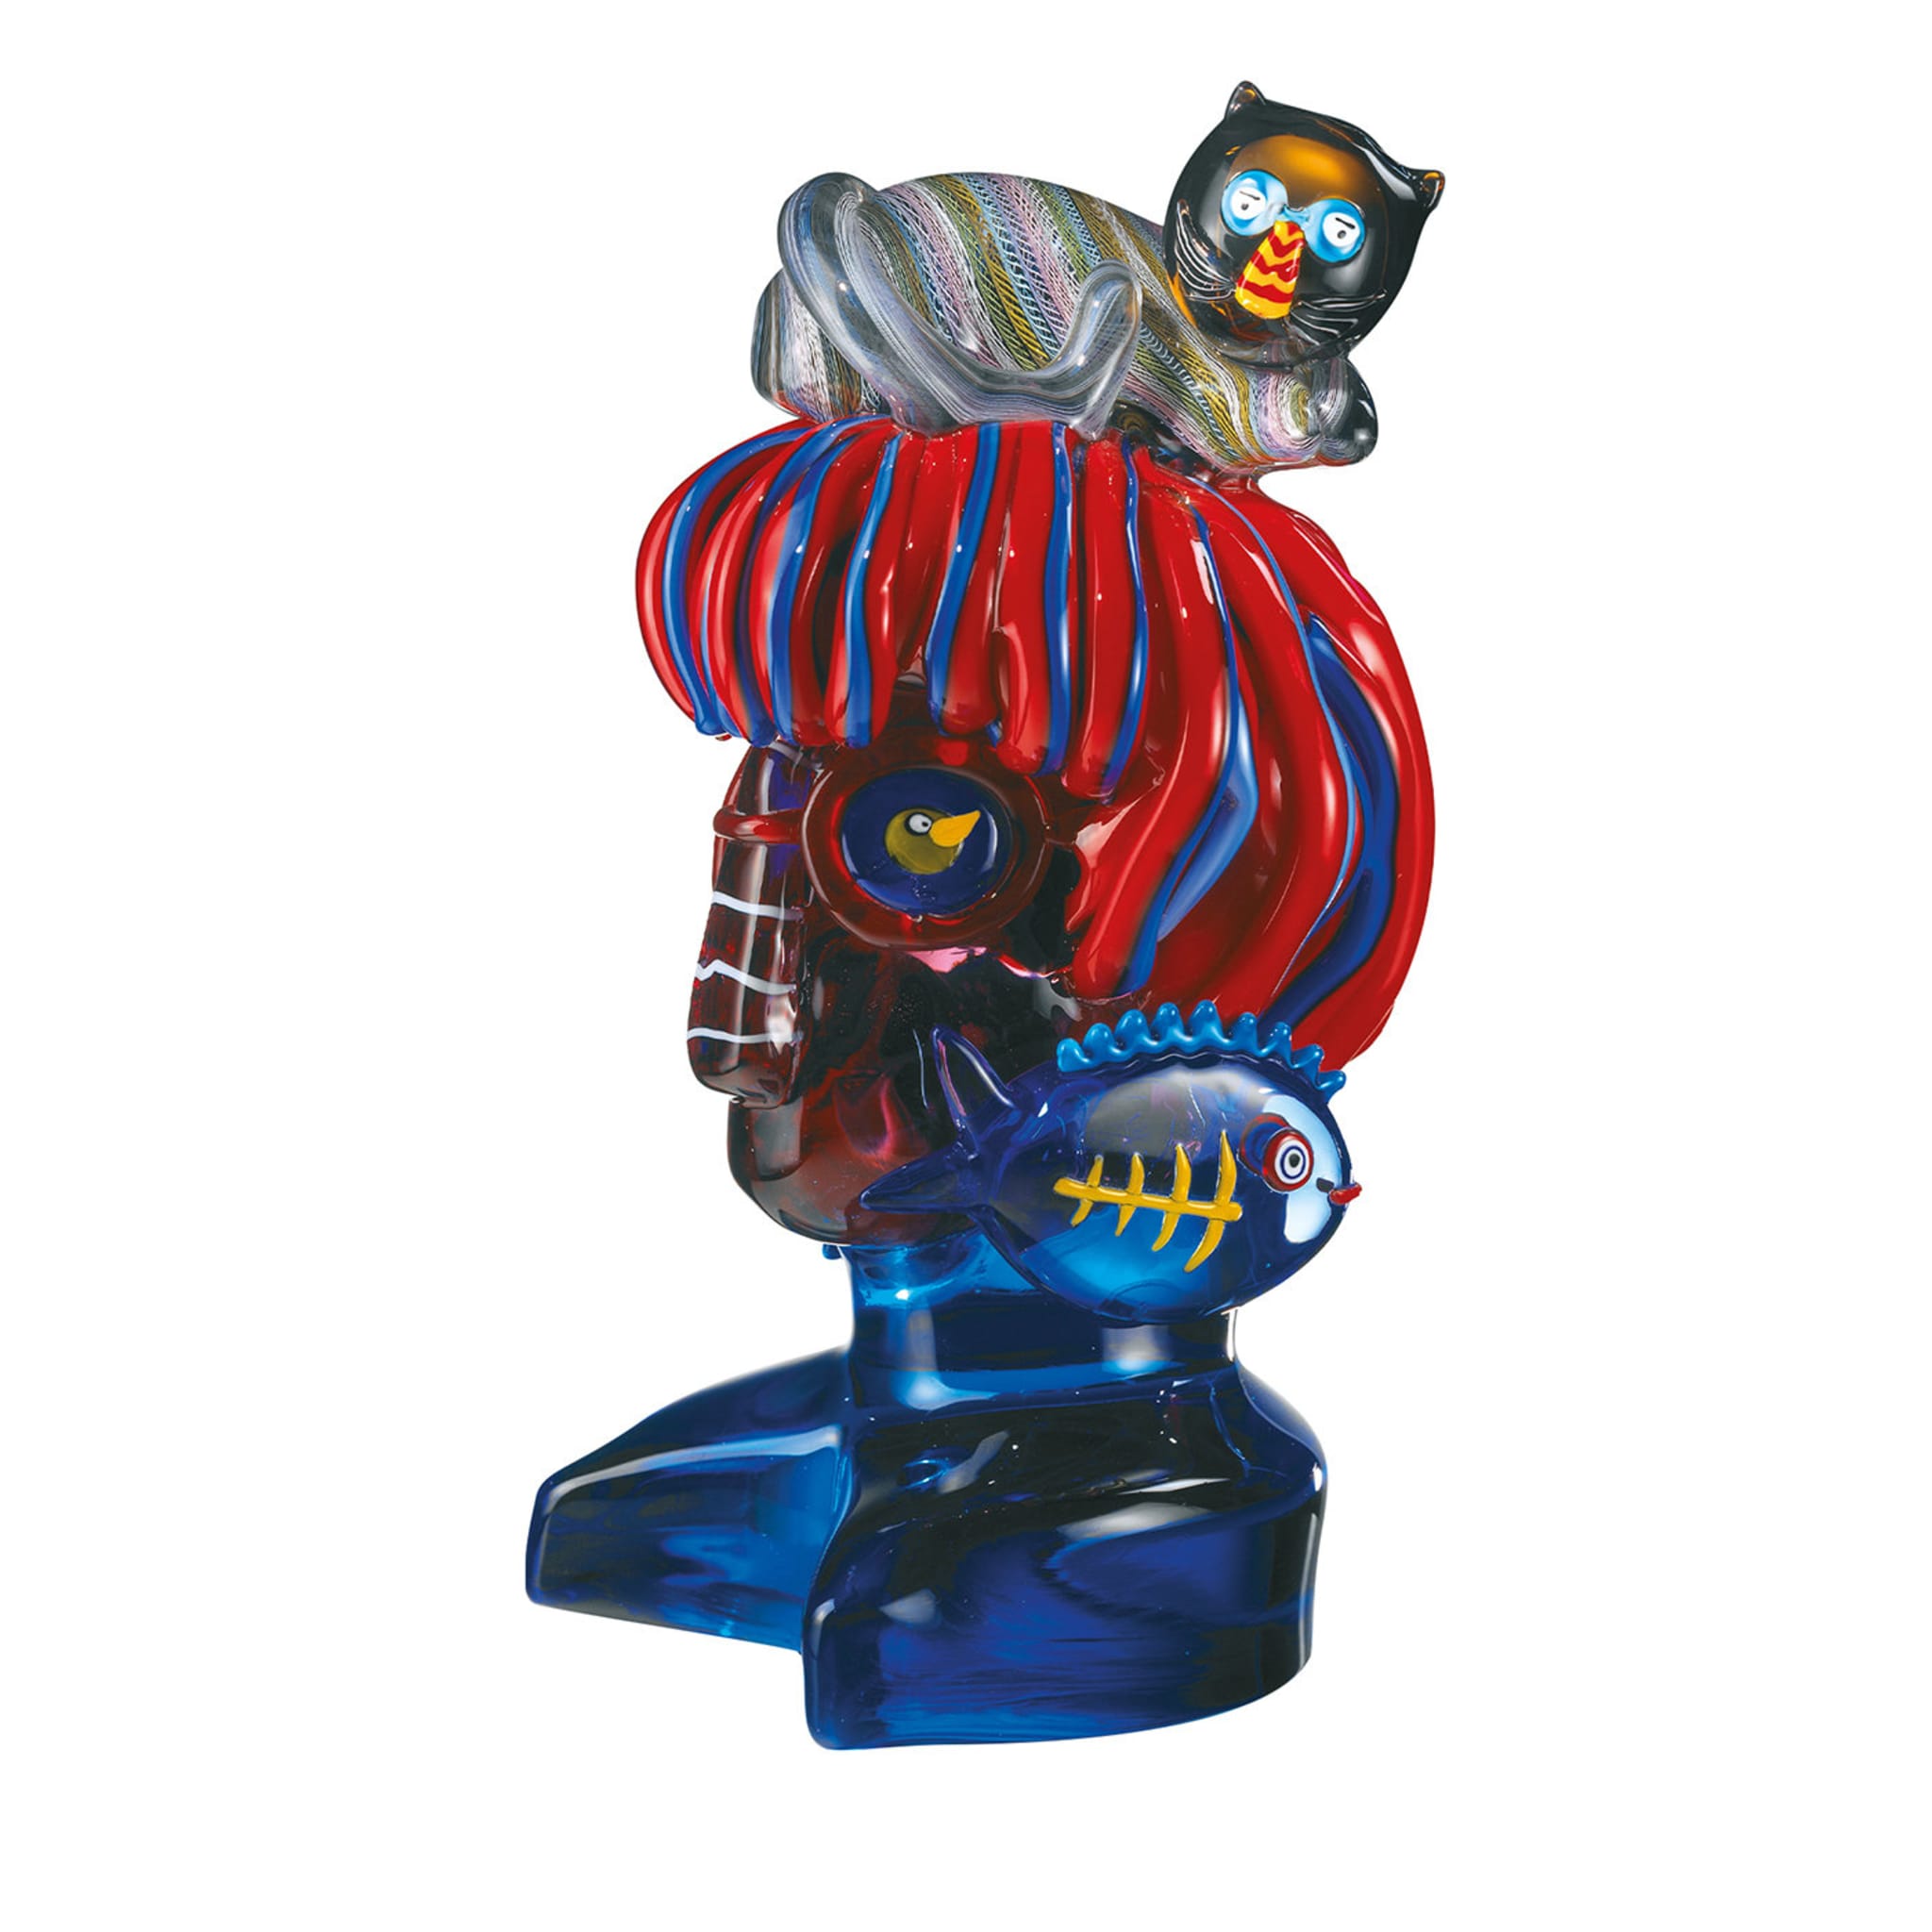 Nido de Gato Sculpture by Alfredo Sosabravo Limited Edition - Main view